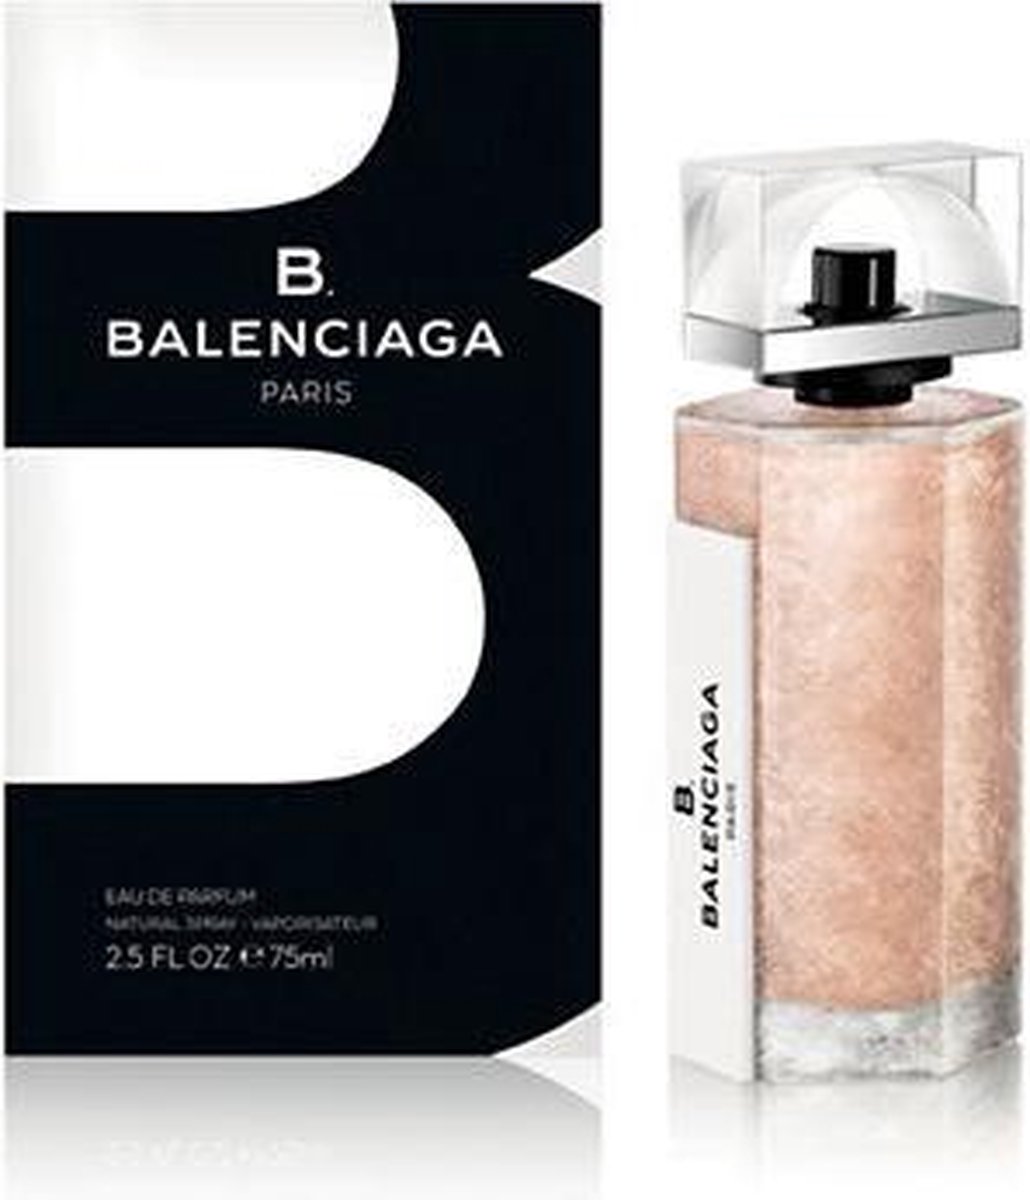 Balenciaga B Perfume Flash Sales, SAVE 58%.